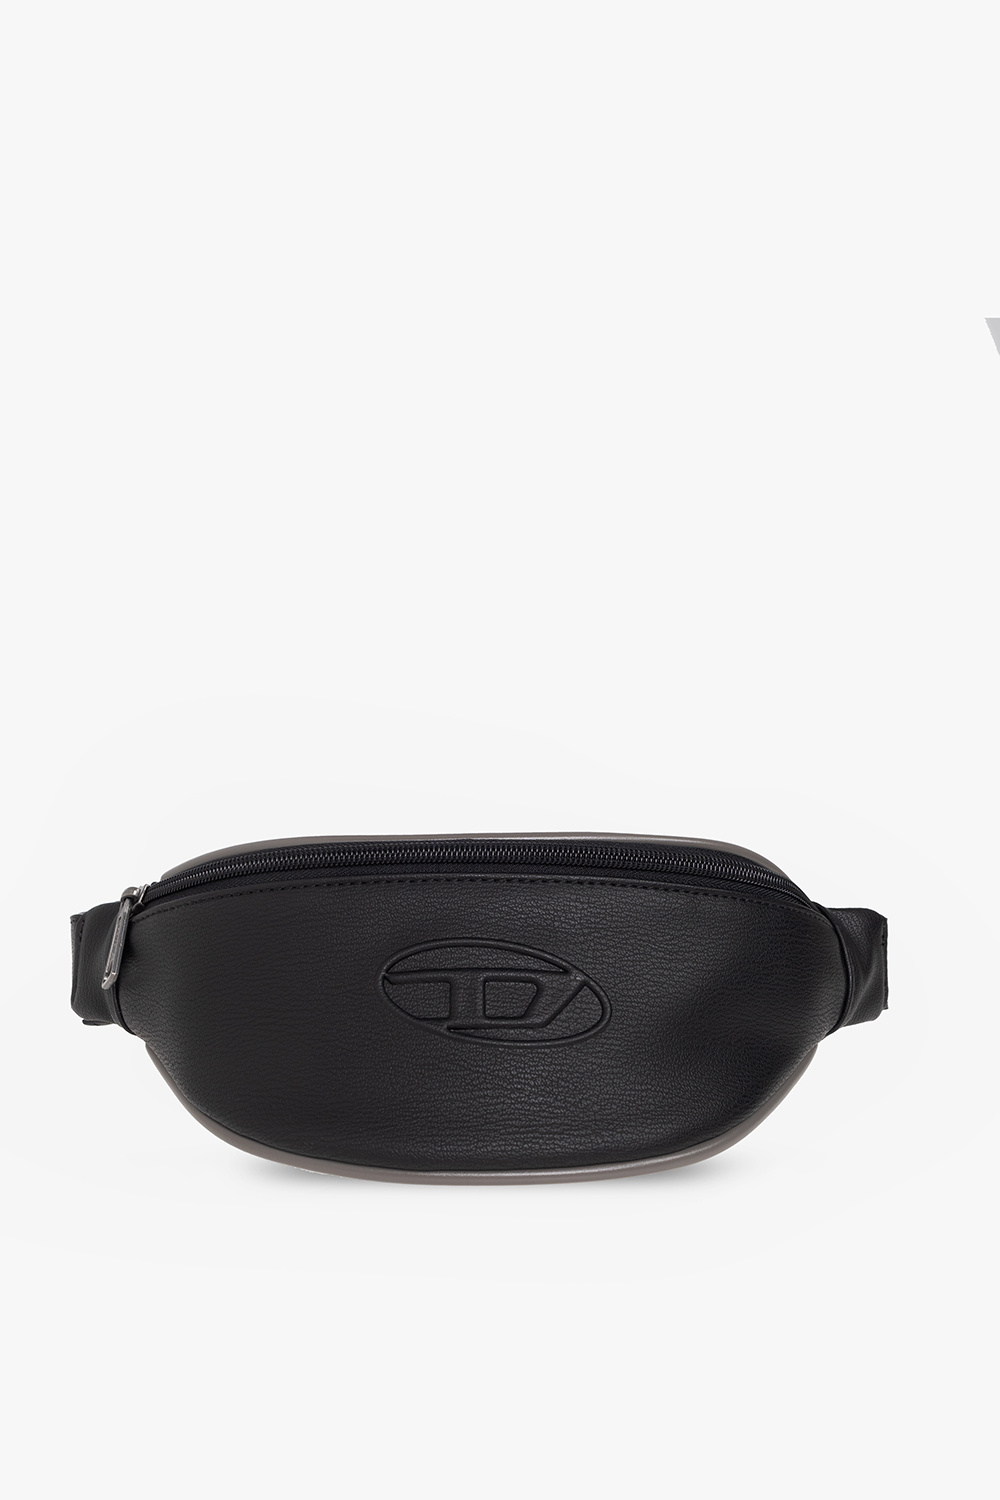 Diesel 'D. 90' belt bag | Men's Bags | Vitkac